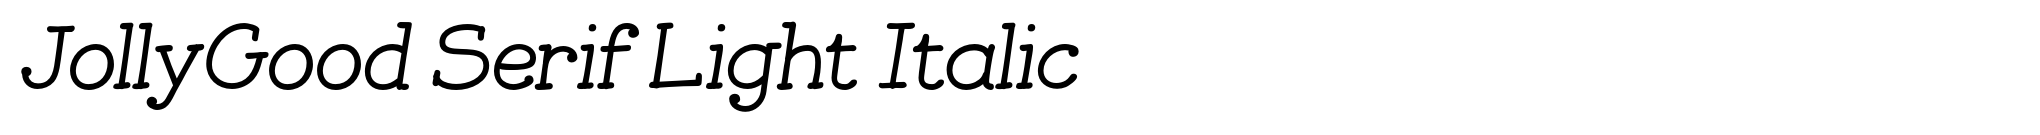 JollyGood Serif Light Italic image